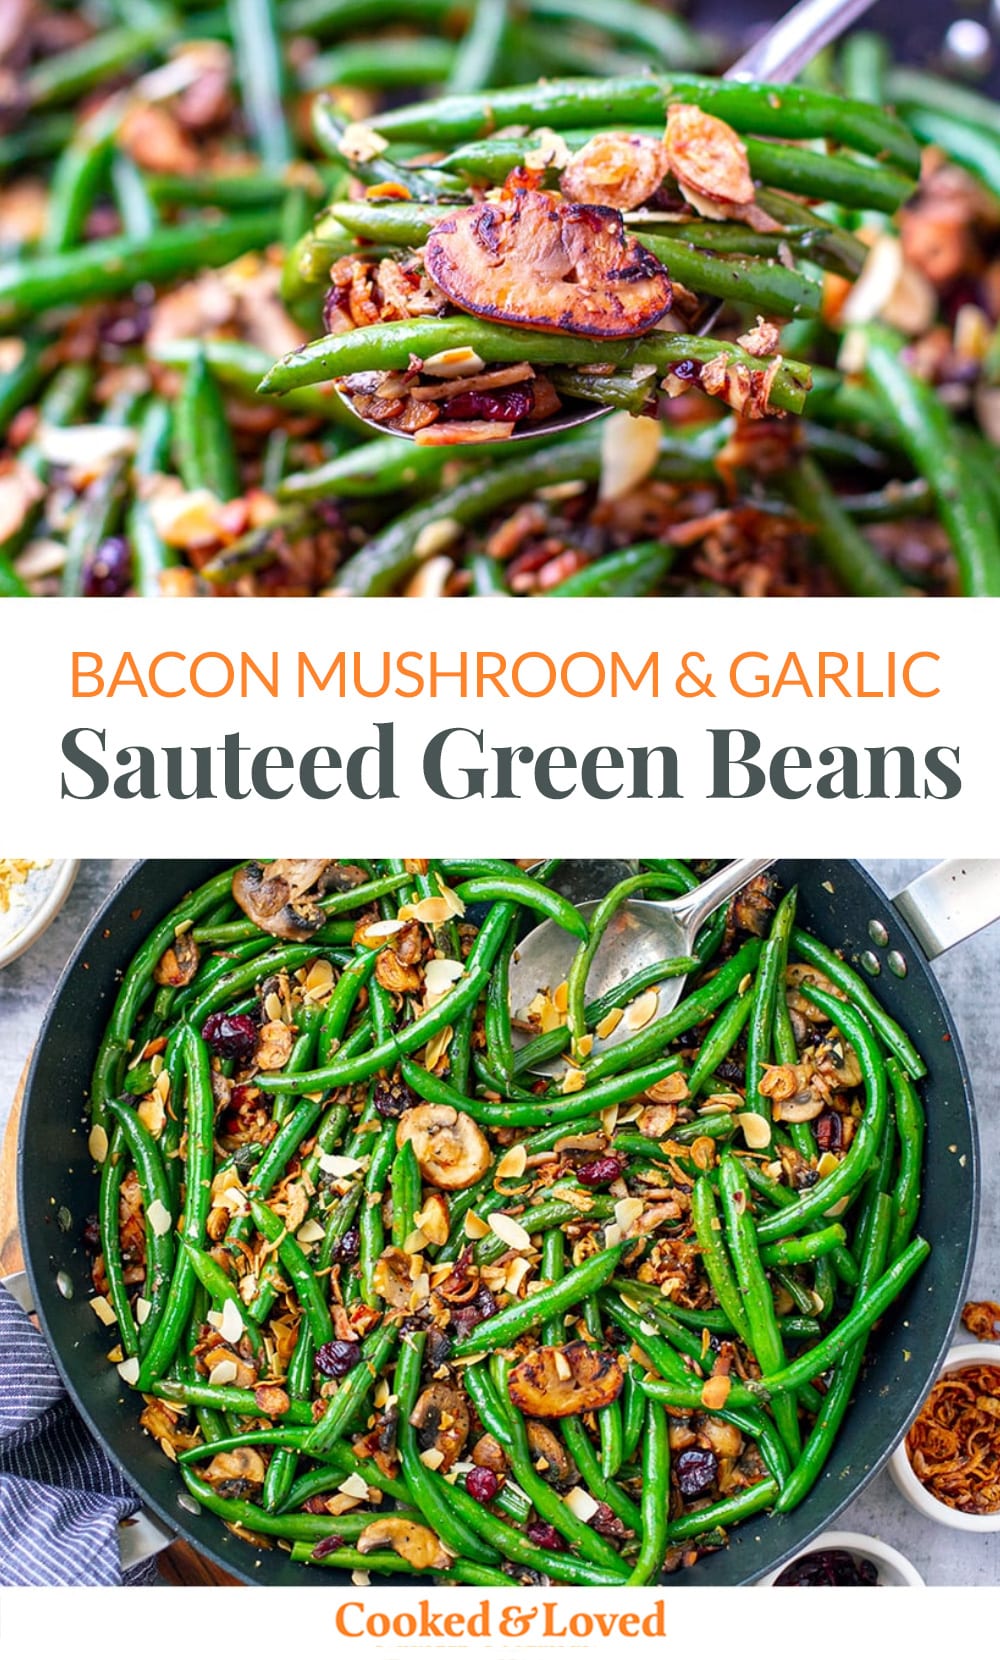 Sautéed Green Beans With Bacon Mushrooms & Garlic